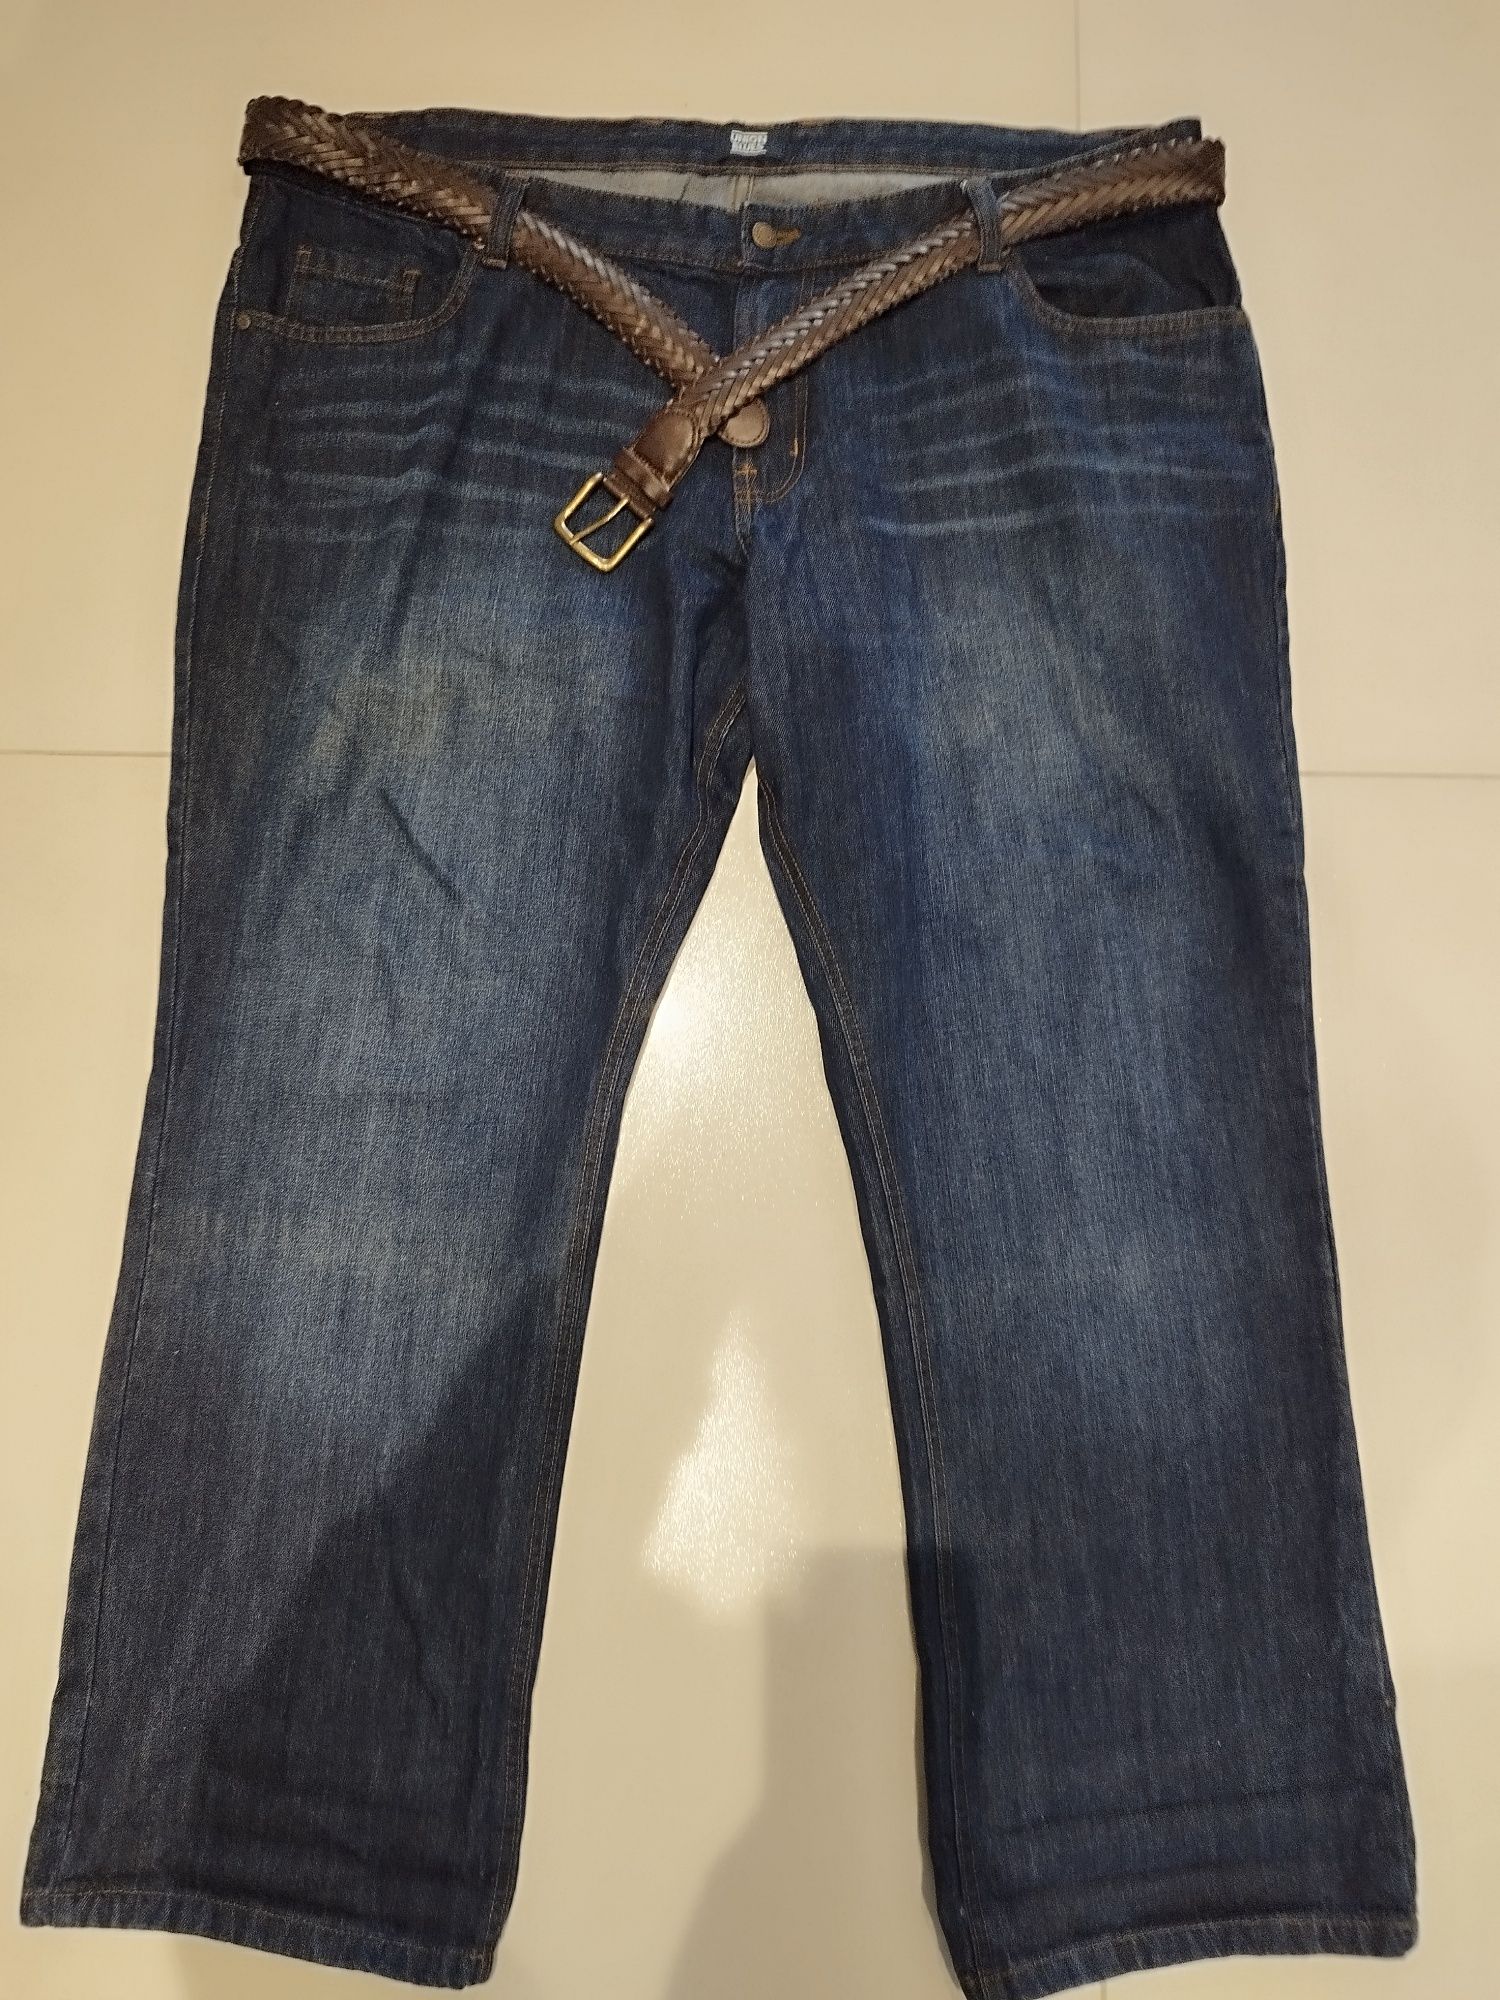 Duże jeansy męskie 44/33 pas 114 cm